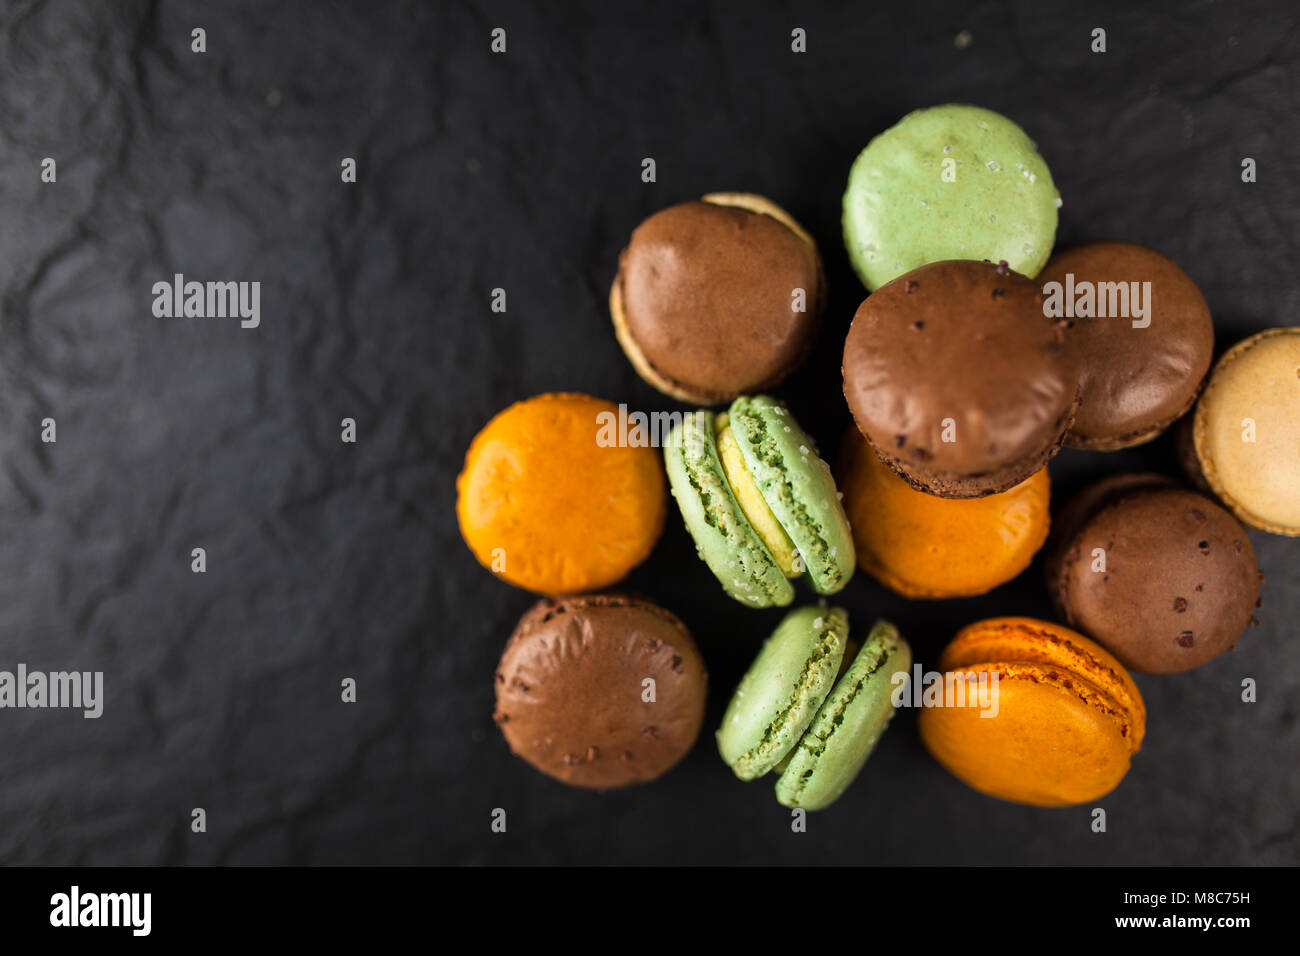 Assortment of macaron cookies Stock Photo